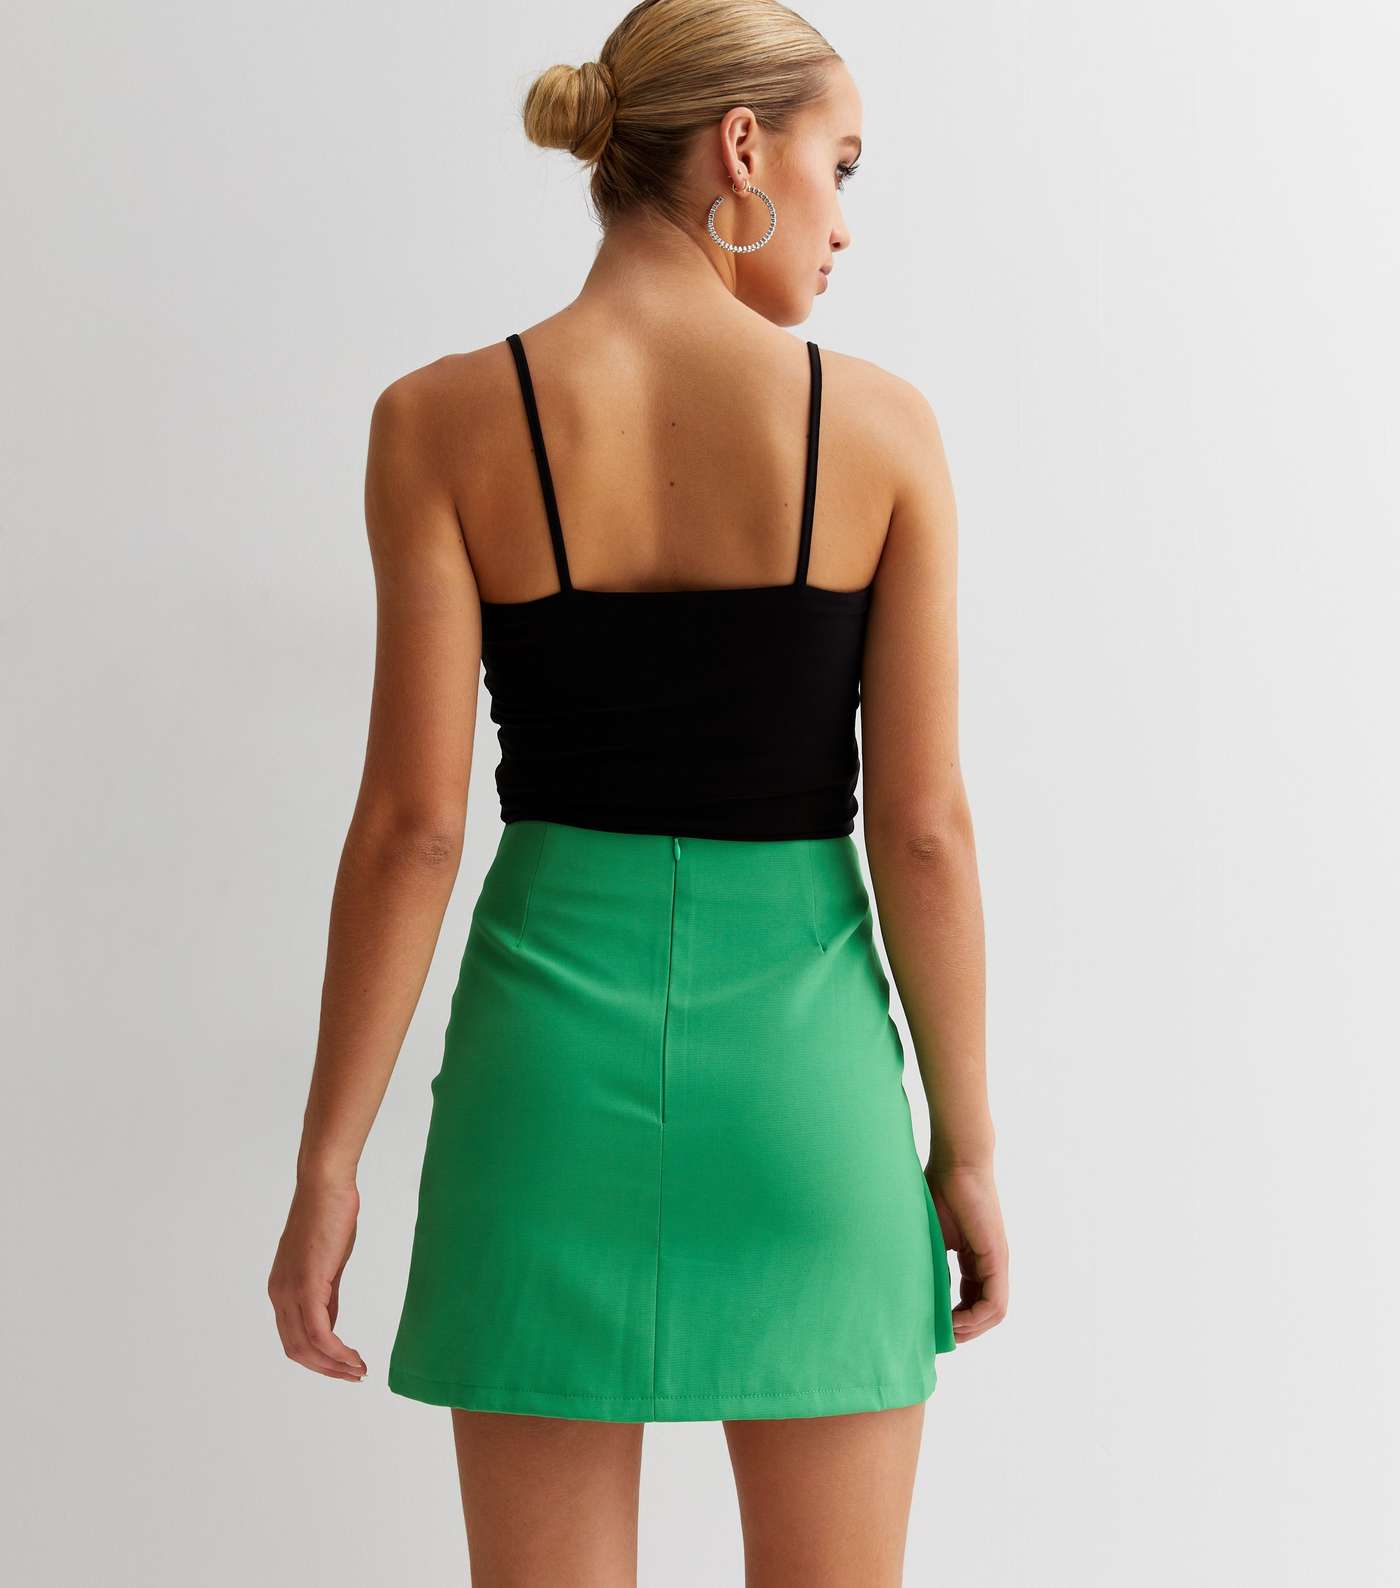 Cameo Rose Green Diamanté Mini Skirt Image 4